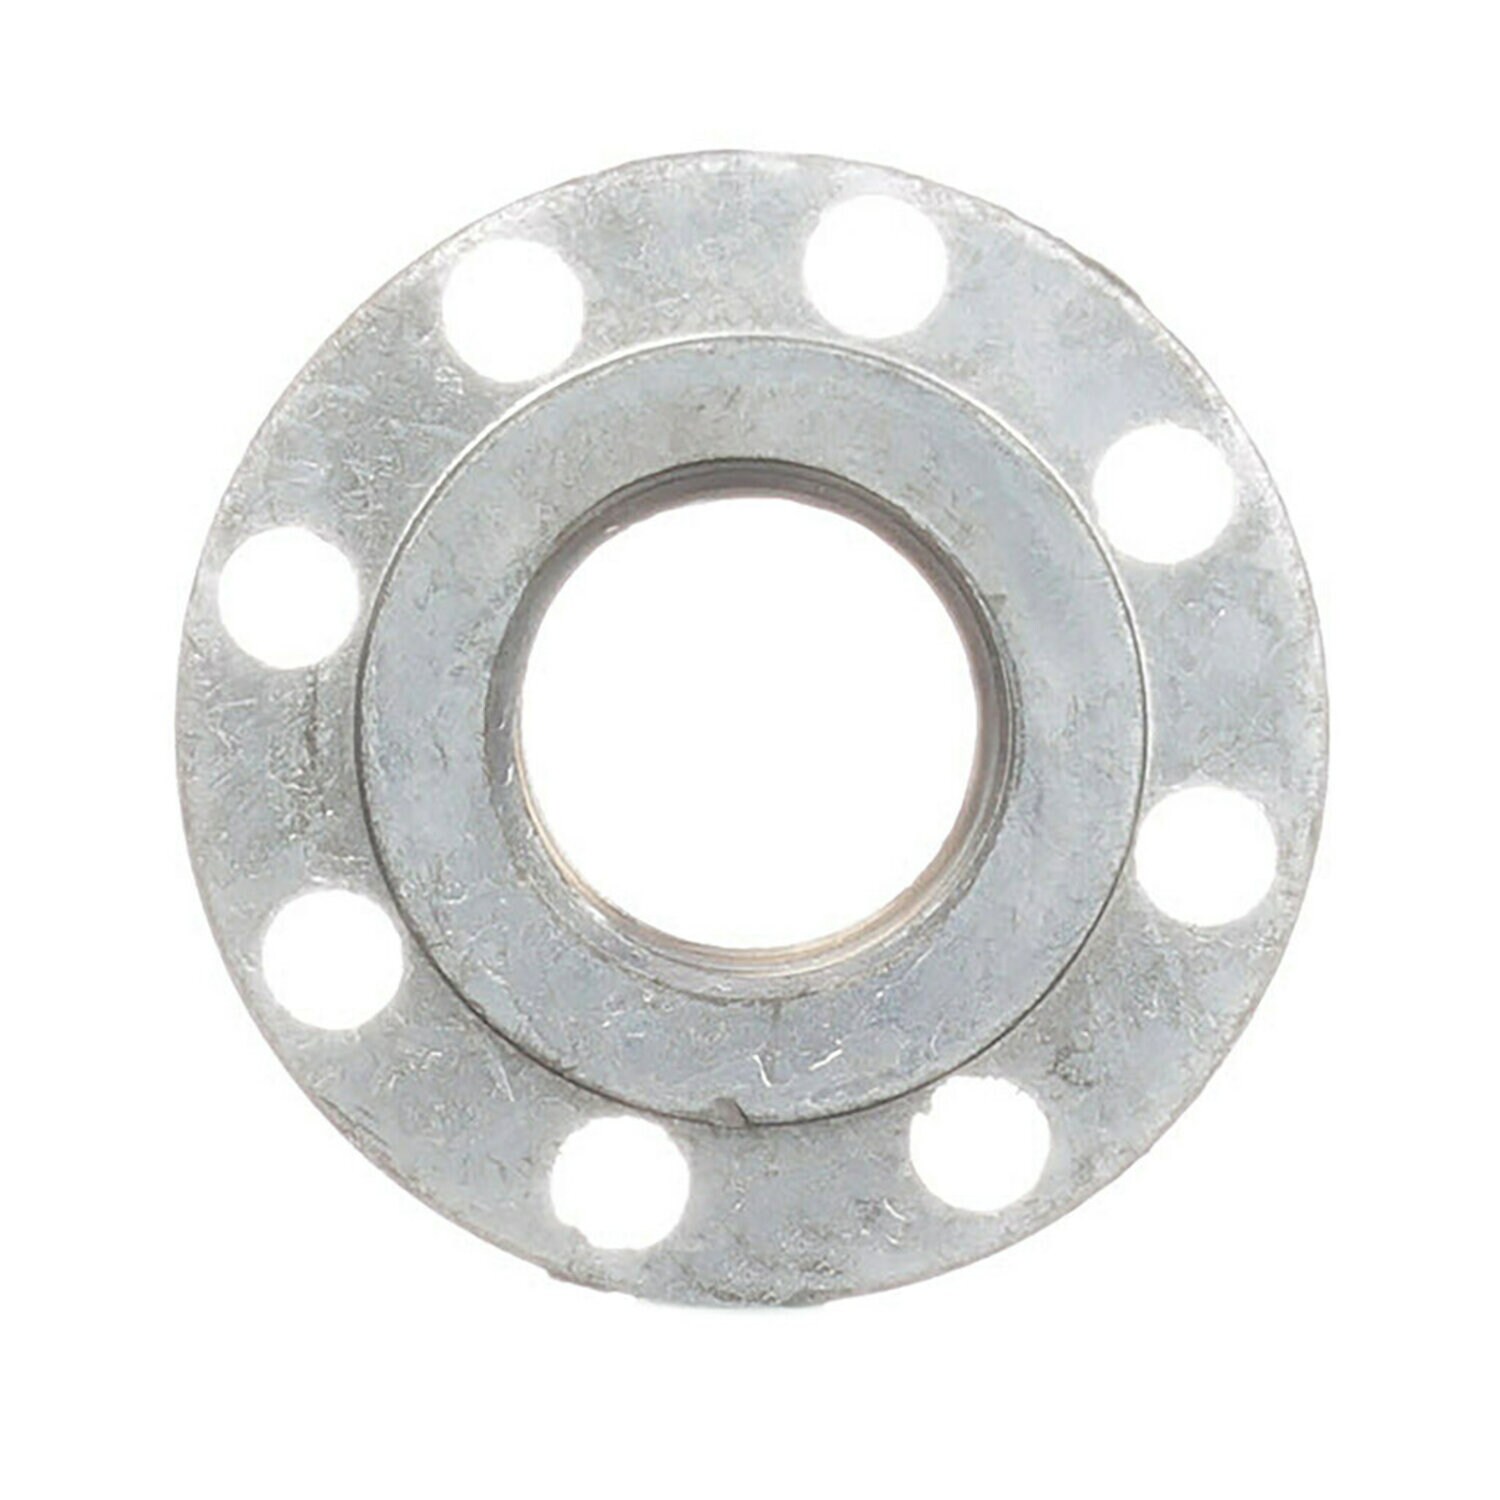 7000122110 - Standard Abrasives Die Cast Pad Nut 542012, 5/8 in-11, 5 ea/Case